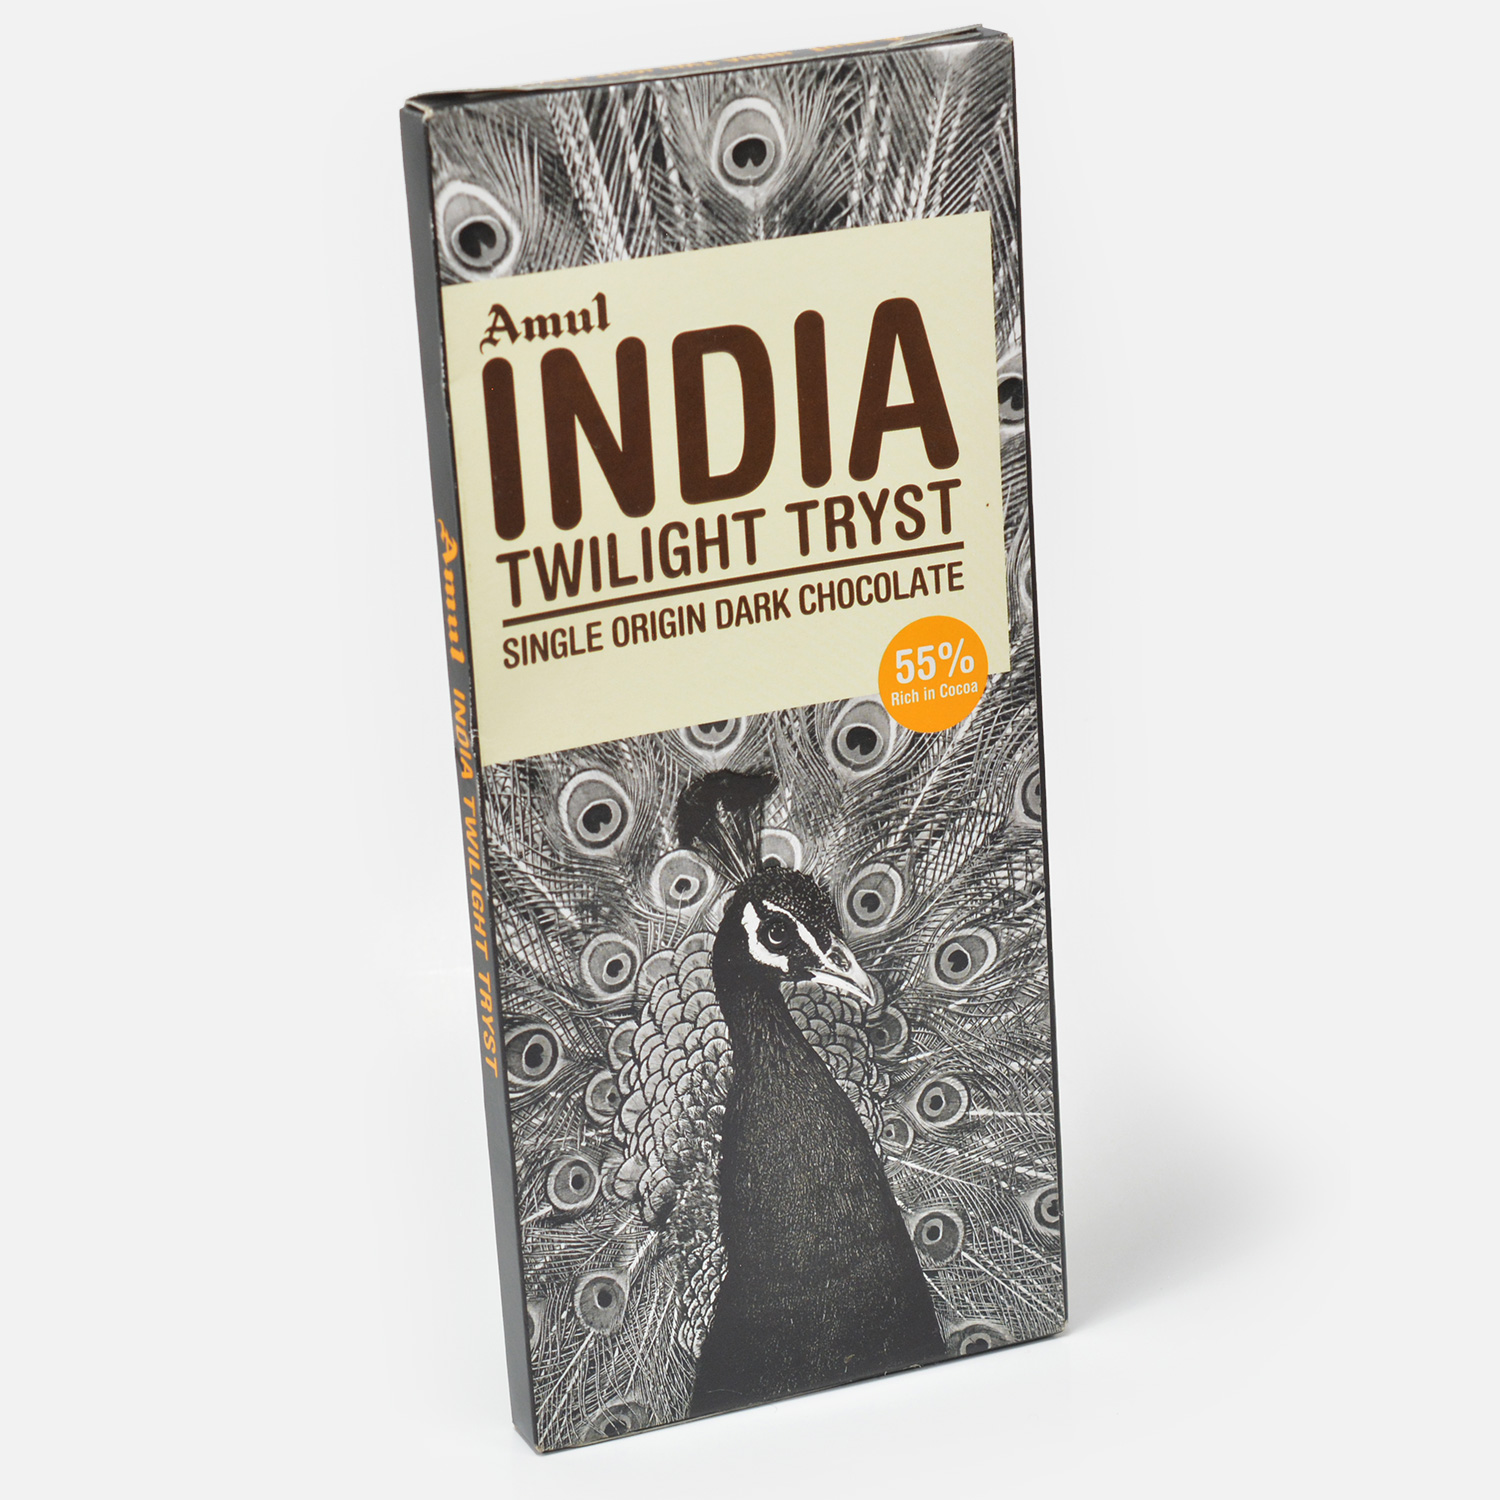 Amul Indian Twilight Tryst Single Origin Dark Chocolate